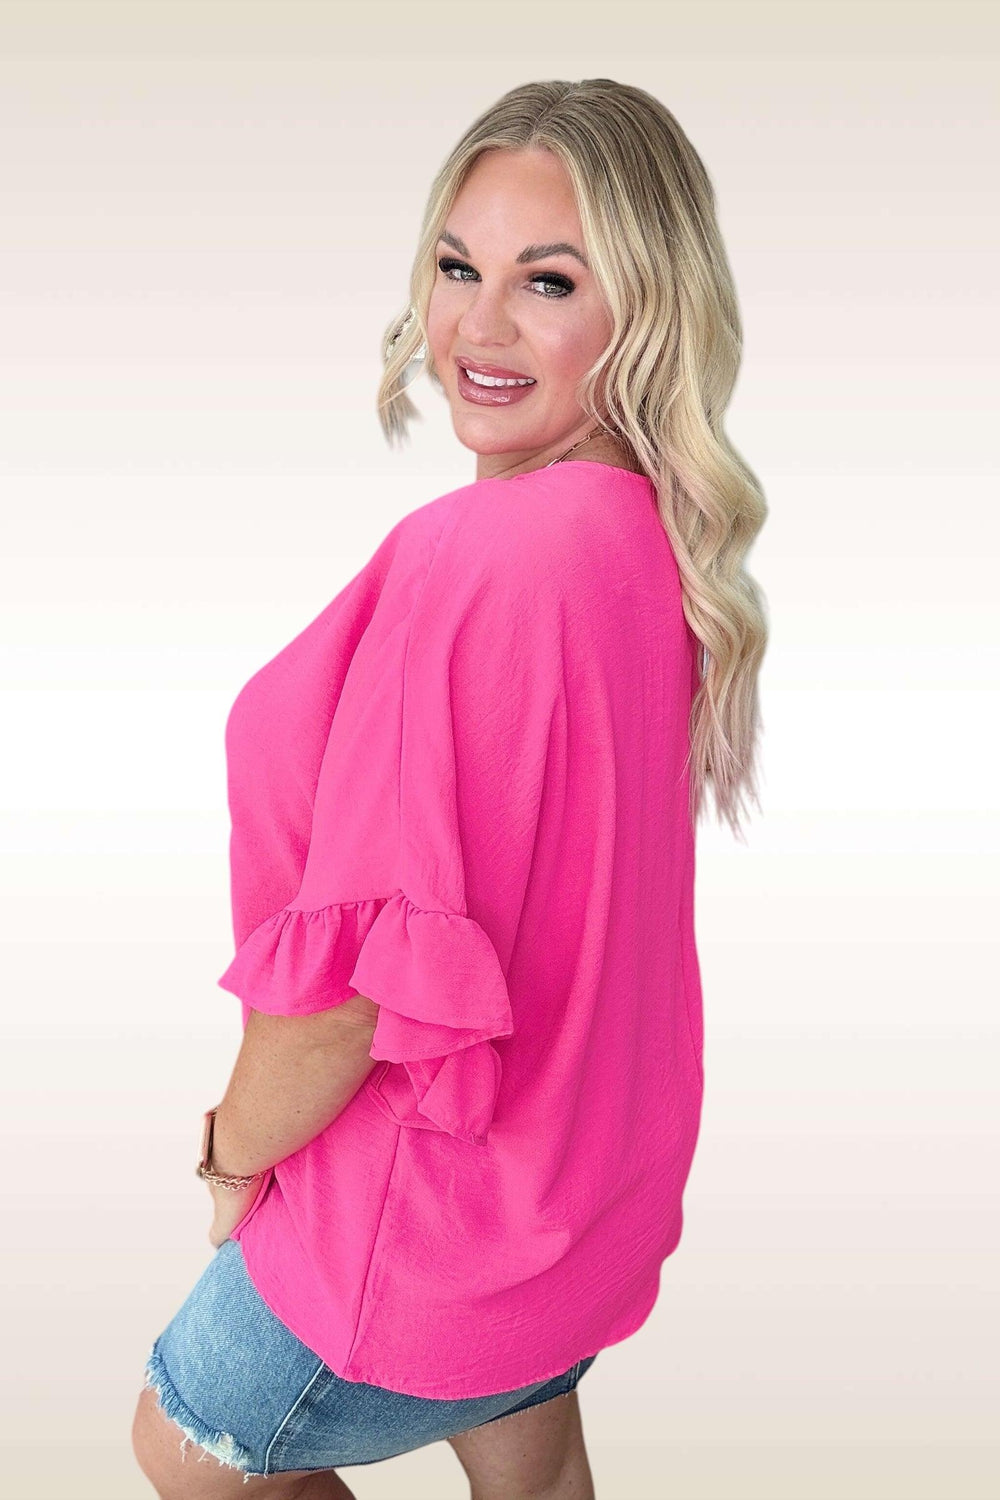 Airflow Peplum Ruffle Sleeve Top in Fuchsia Pink Shirts & Tops